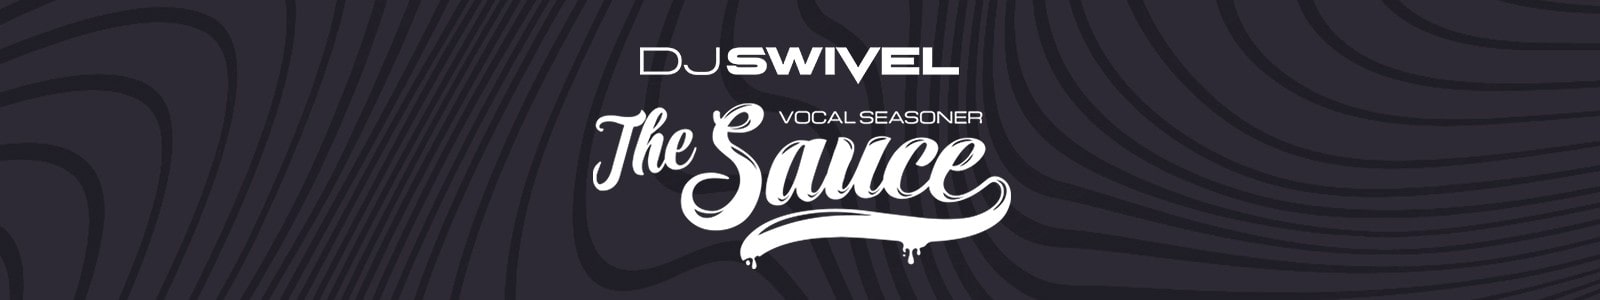 the sauce vocal seasoner